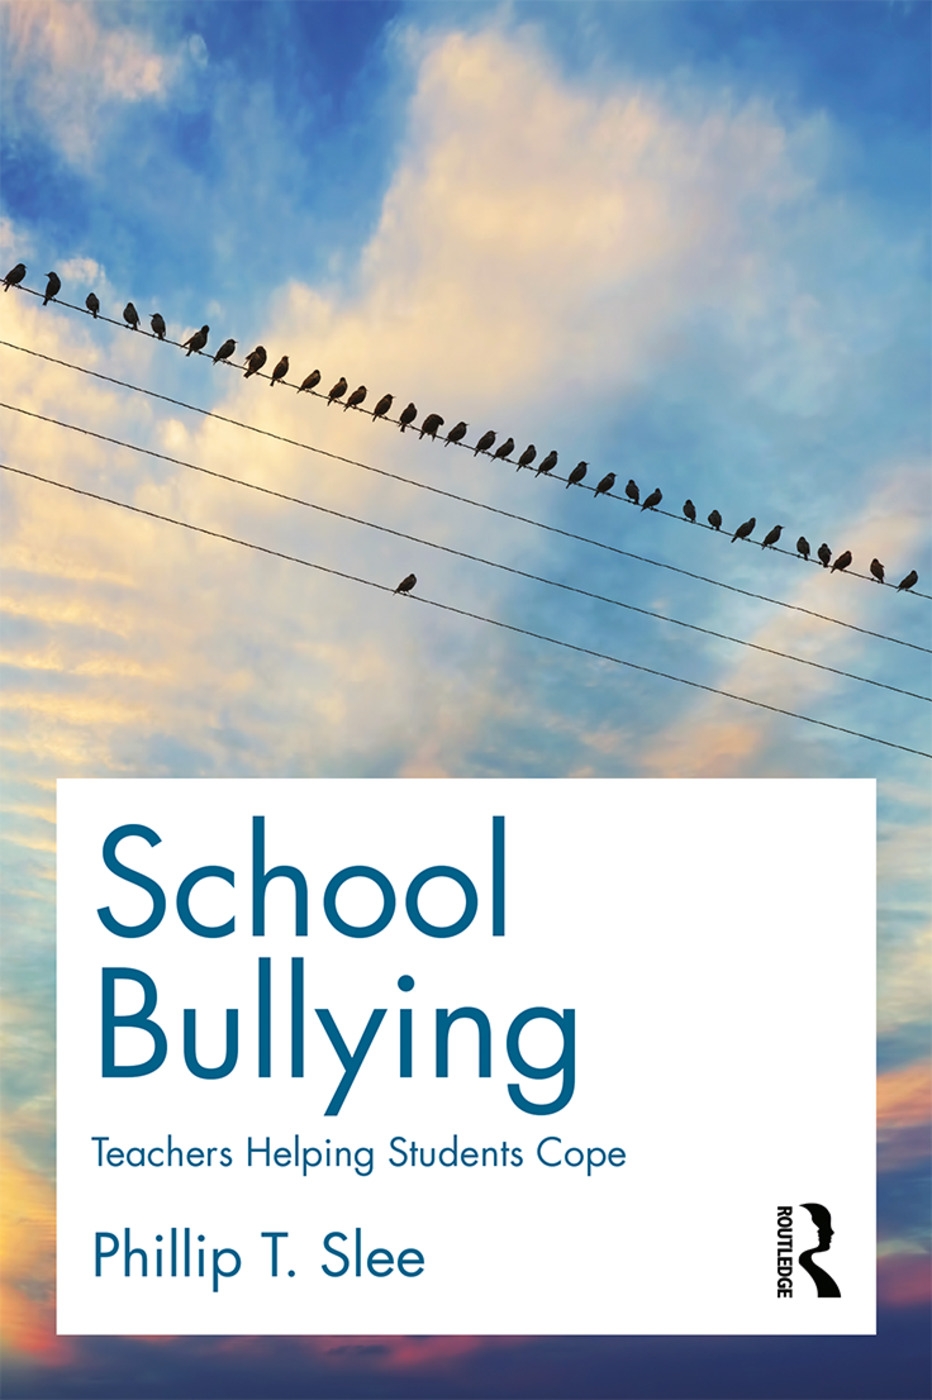 School Bullying: Teachers Helping Students Cope